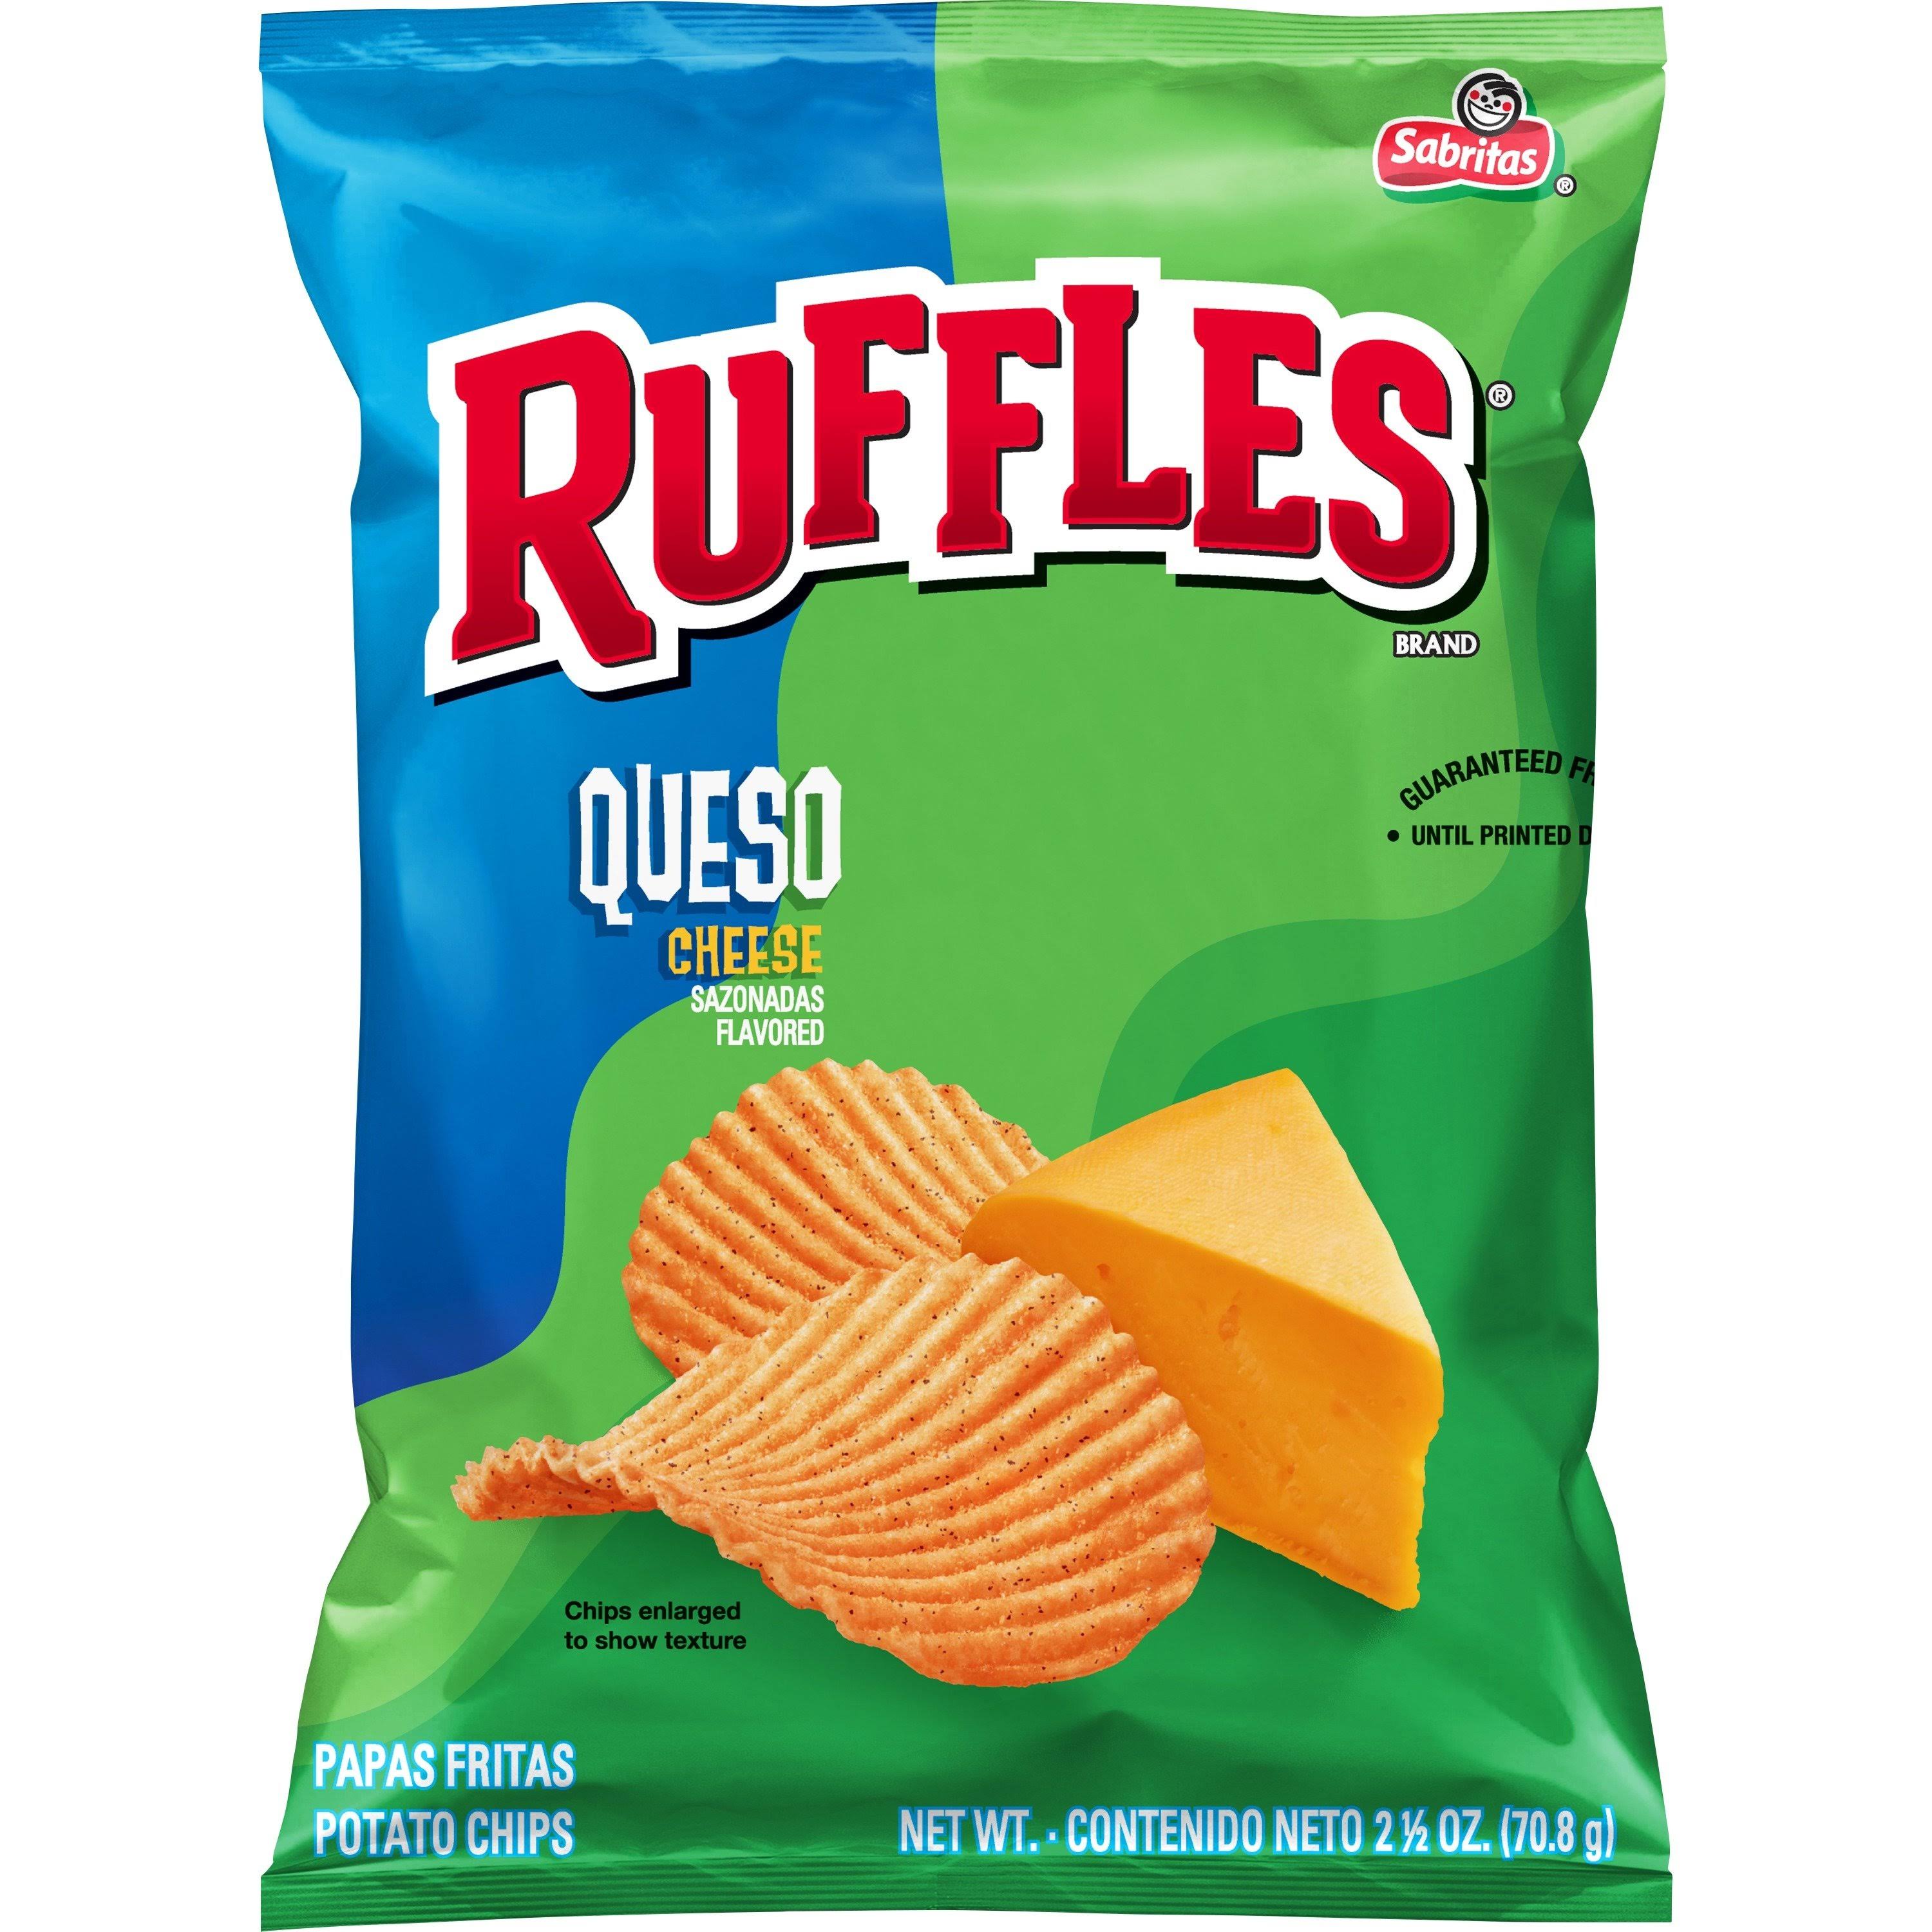 Ruffles Queso Cheese Potato Chips - 8.5oz